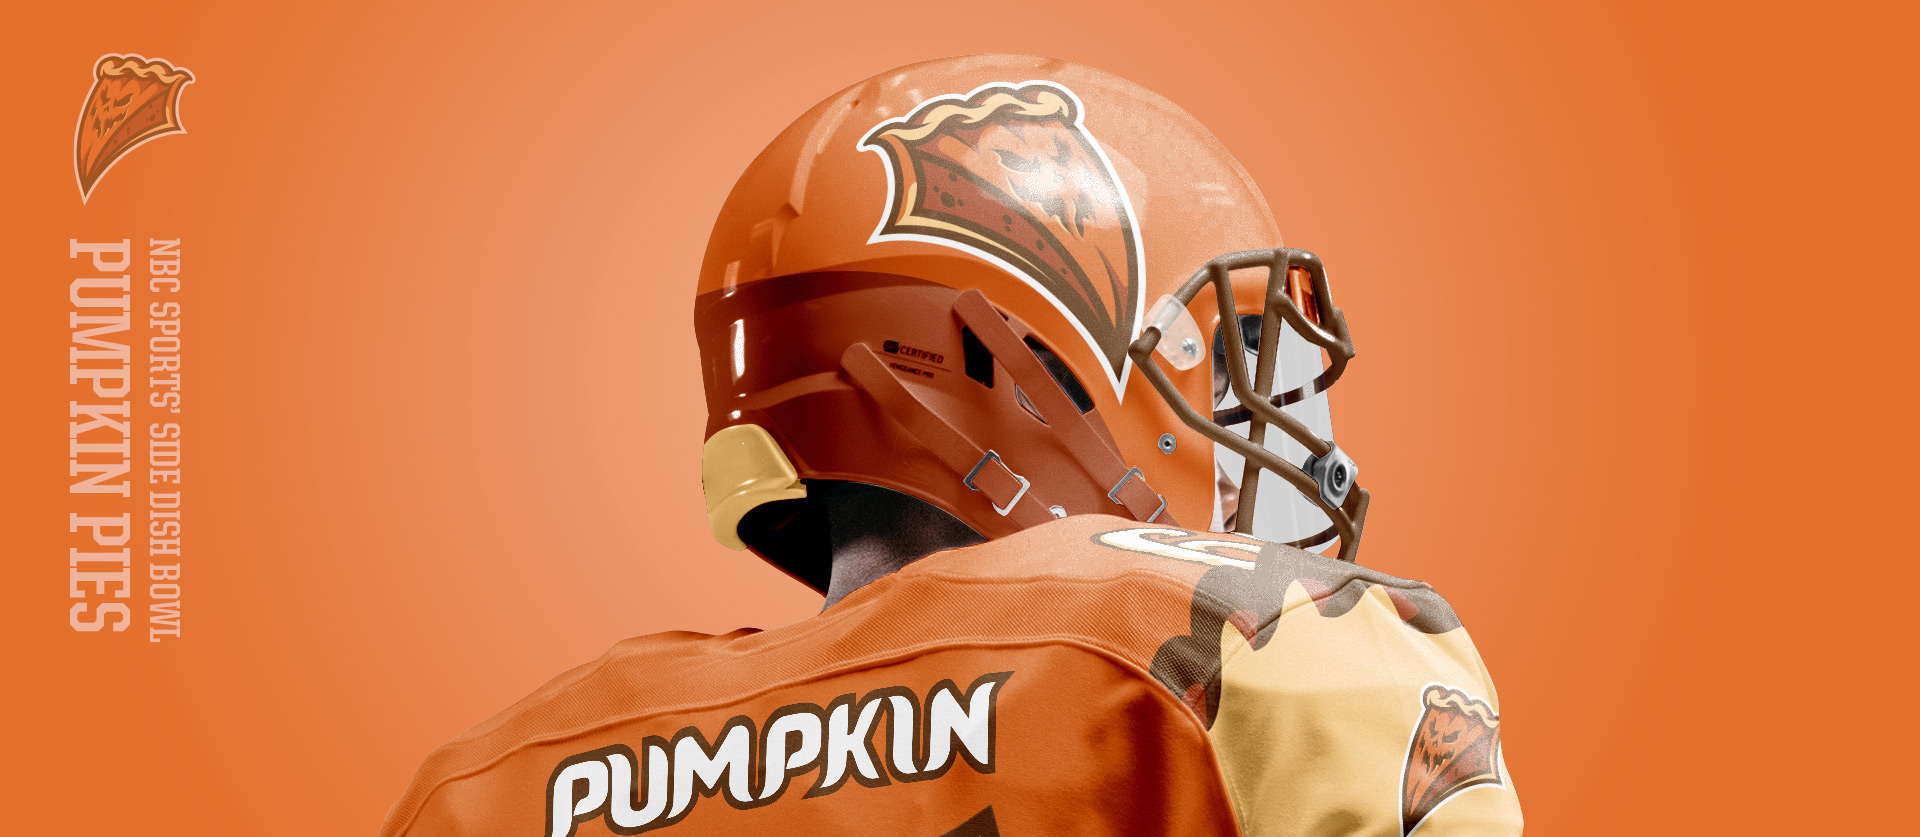 Pumpkin Pies Helmet Backside - Football Uniform Design for NBC Sports Thanksgiving Side Dish Bowl